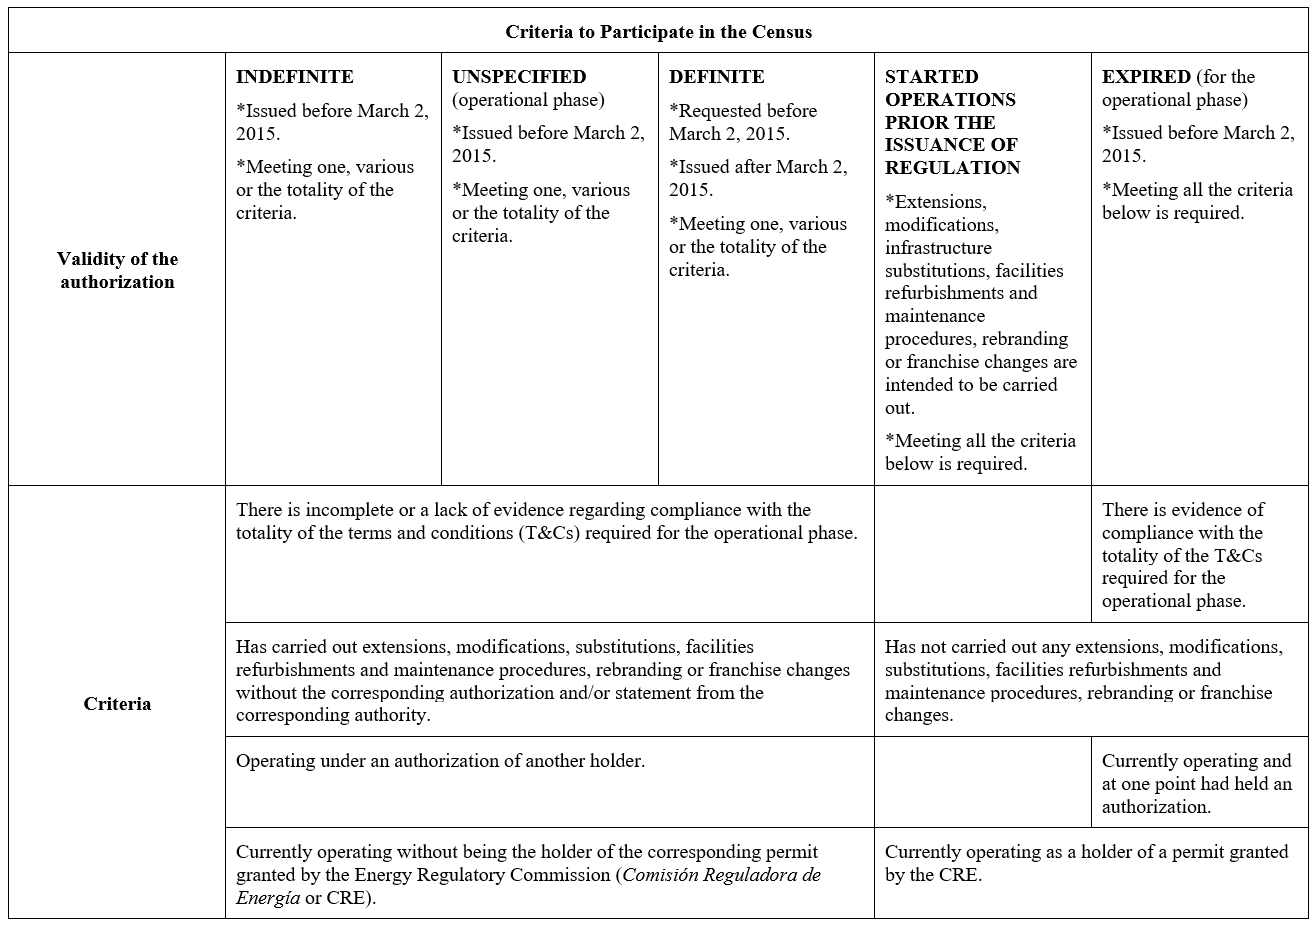 Criteria to participate in Mexico's Environmental Impact Census